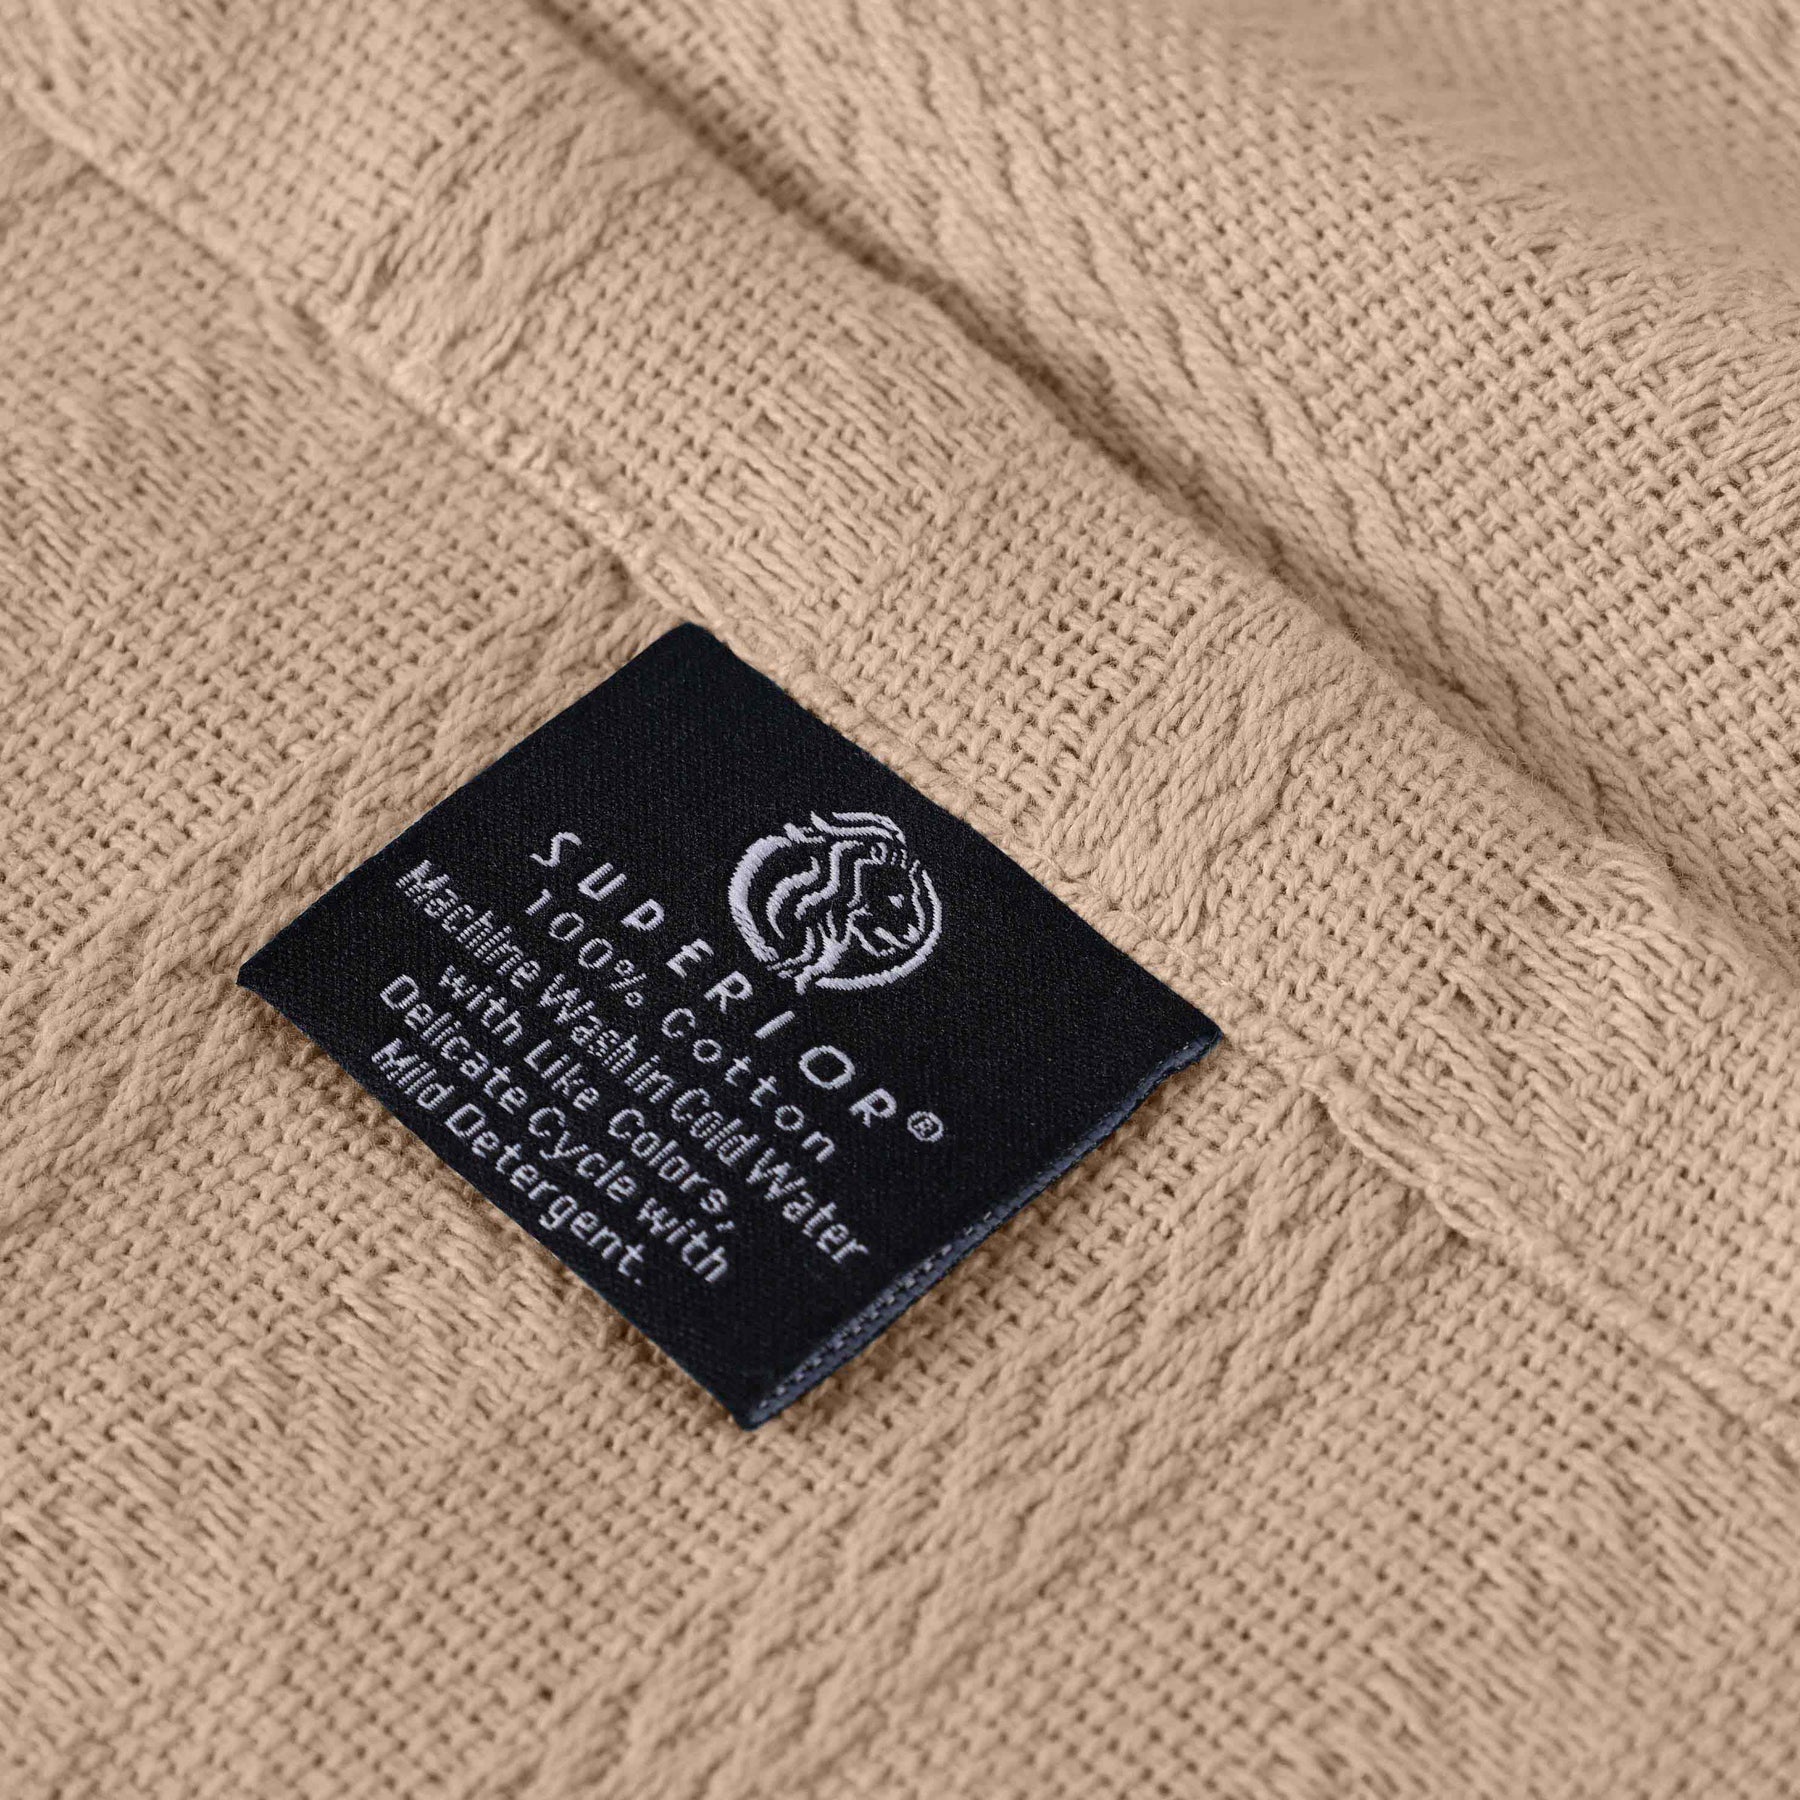 Clara Cotton Textured Jacquard Striped Lightweight Woven Blanket